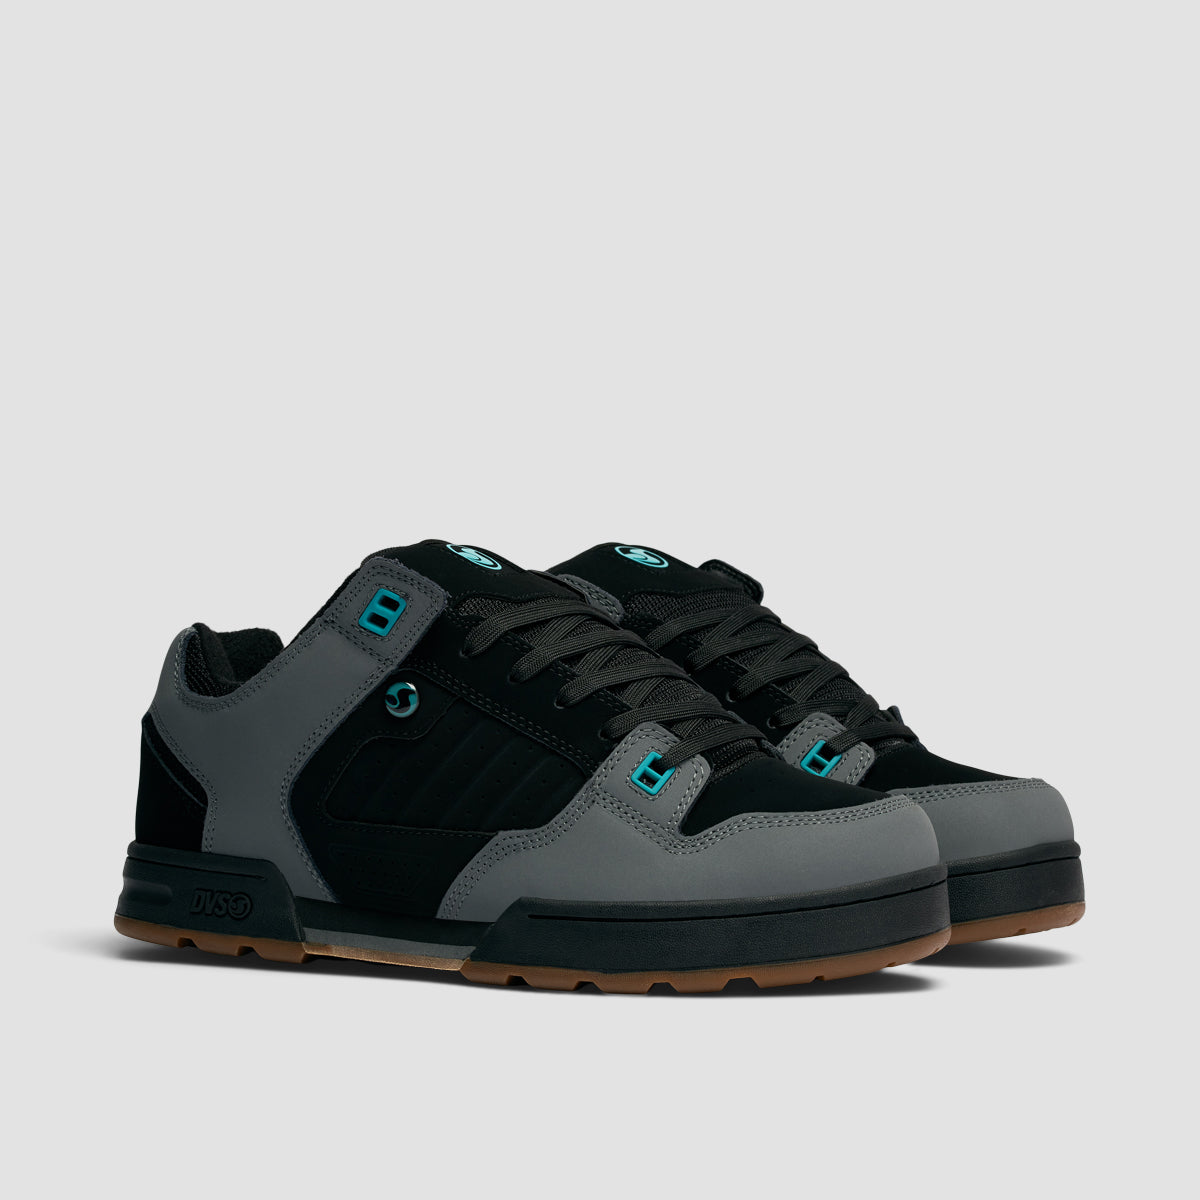 DVS Militia Snow Shoes - Black/Turquoise/Gum Nubuck